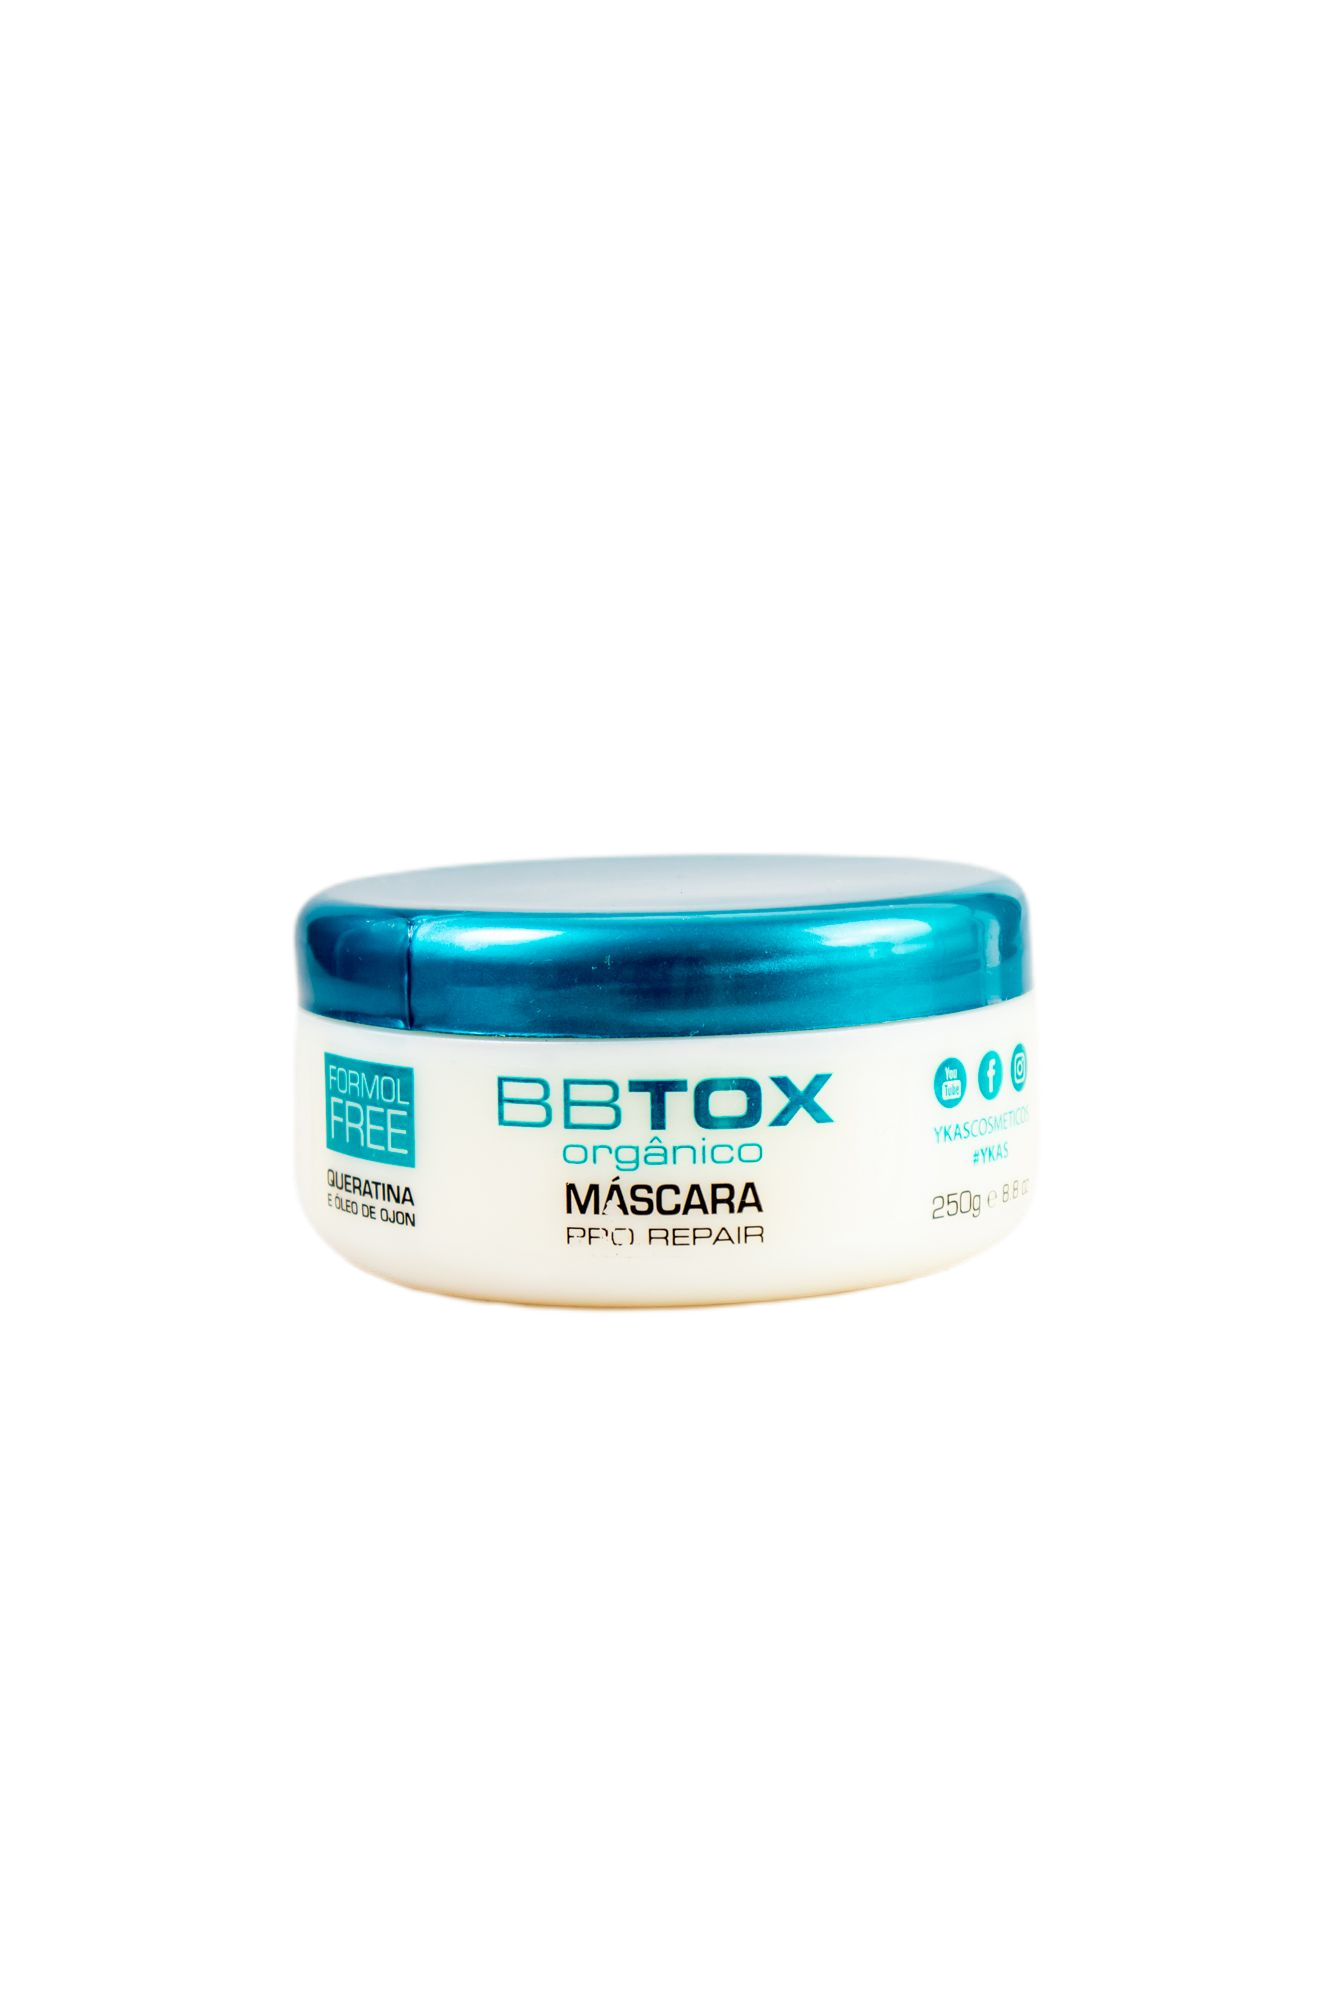 Ykas Hair Mask BBTox Organic Keratin Ojon Botox Hair Treatment Mask Pro Repair 250g - Ykas